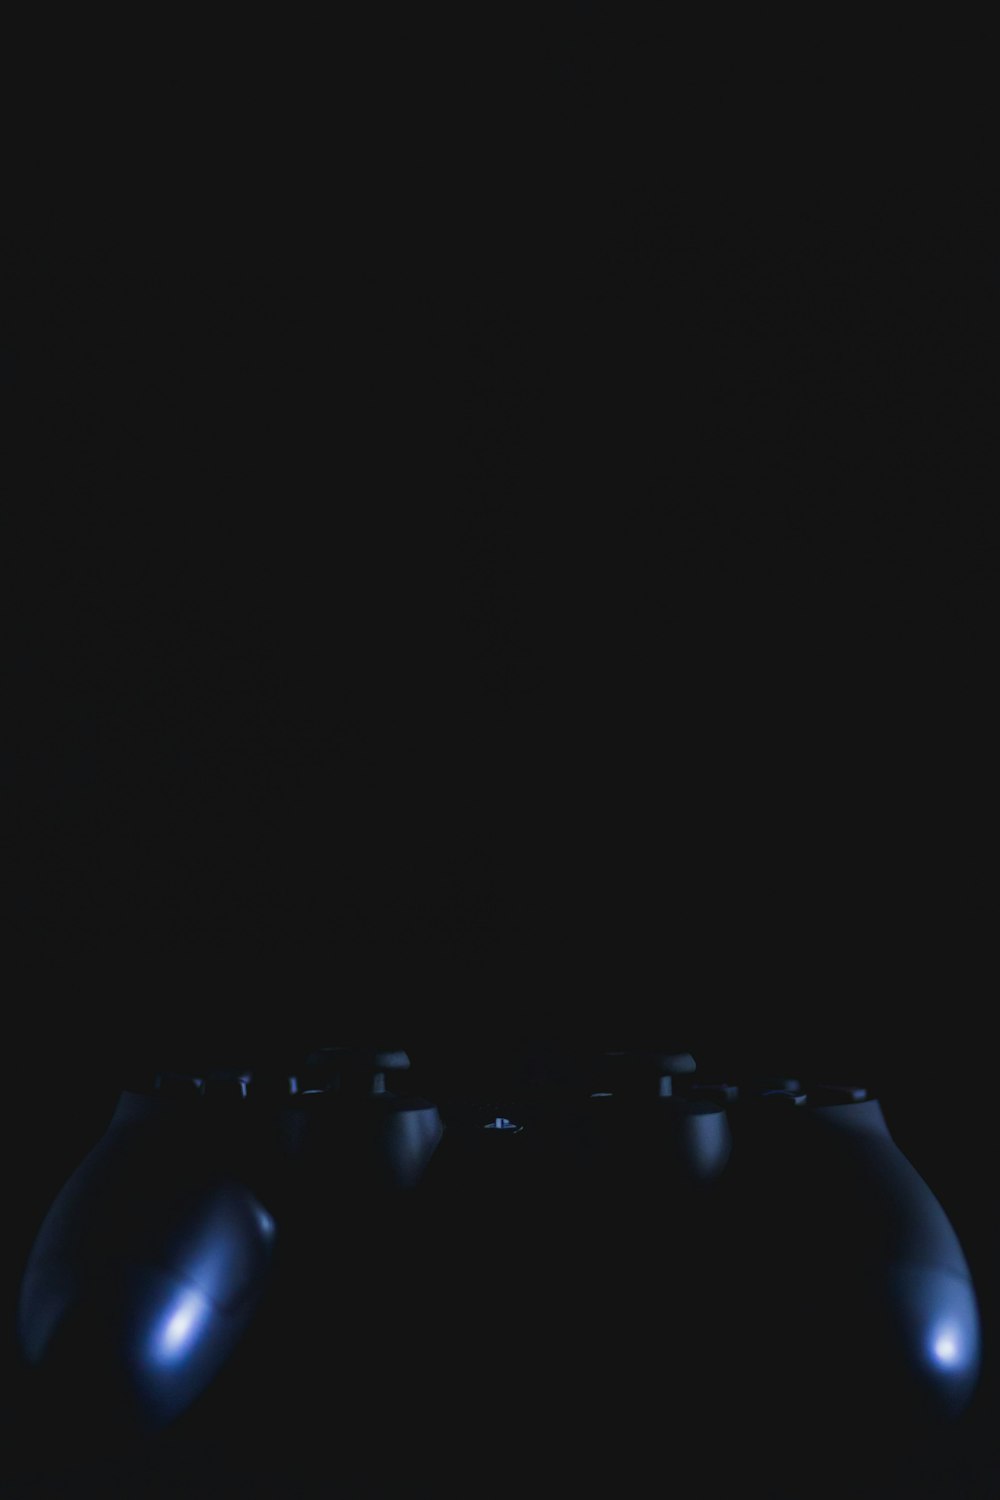 blue game controller